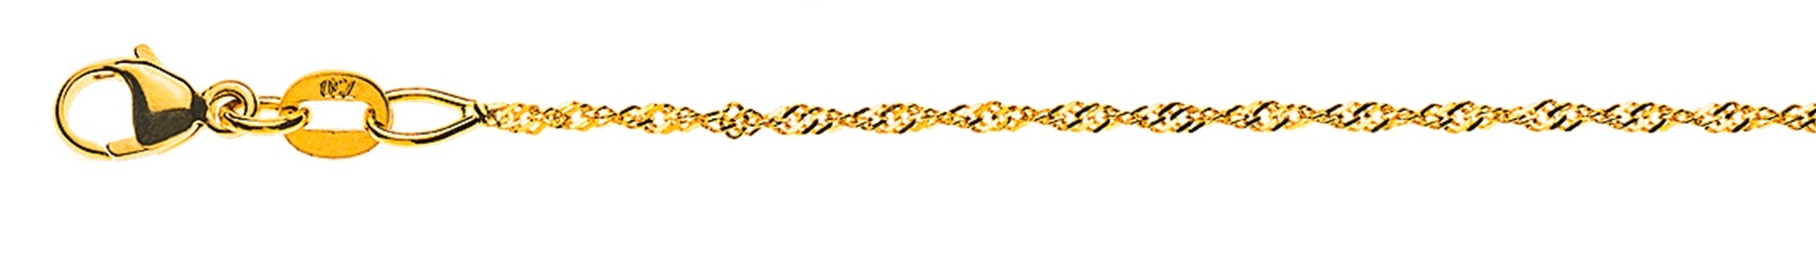 AURONOS Style Necklace Yellow Gold 9K Singapore Chain 60cm 1.2mm